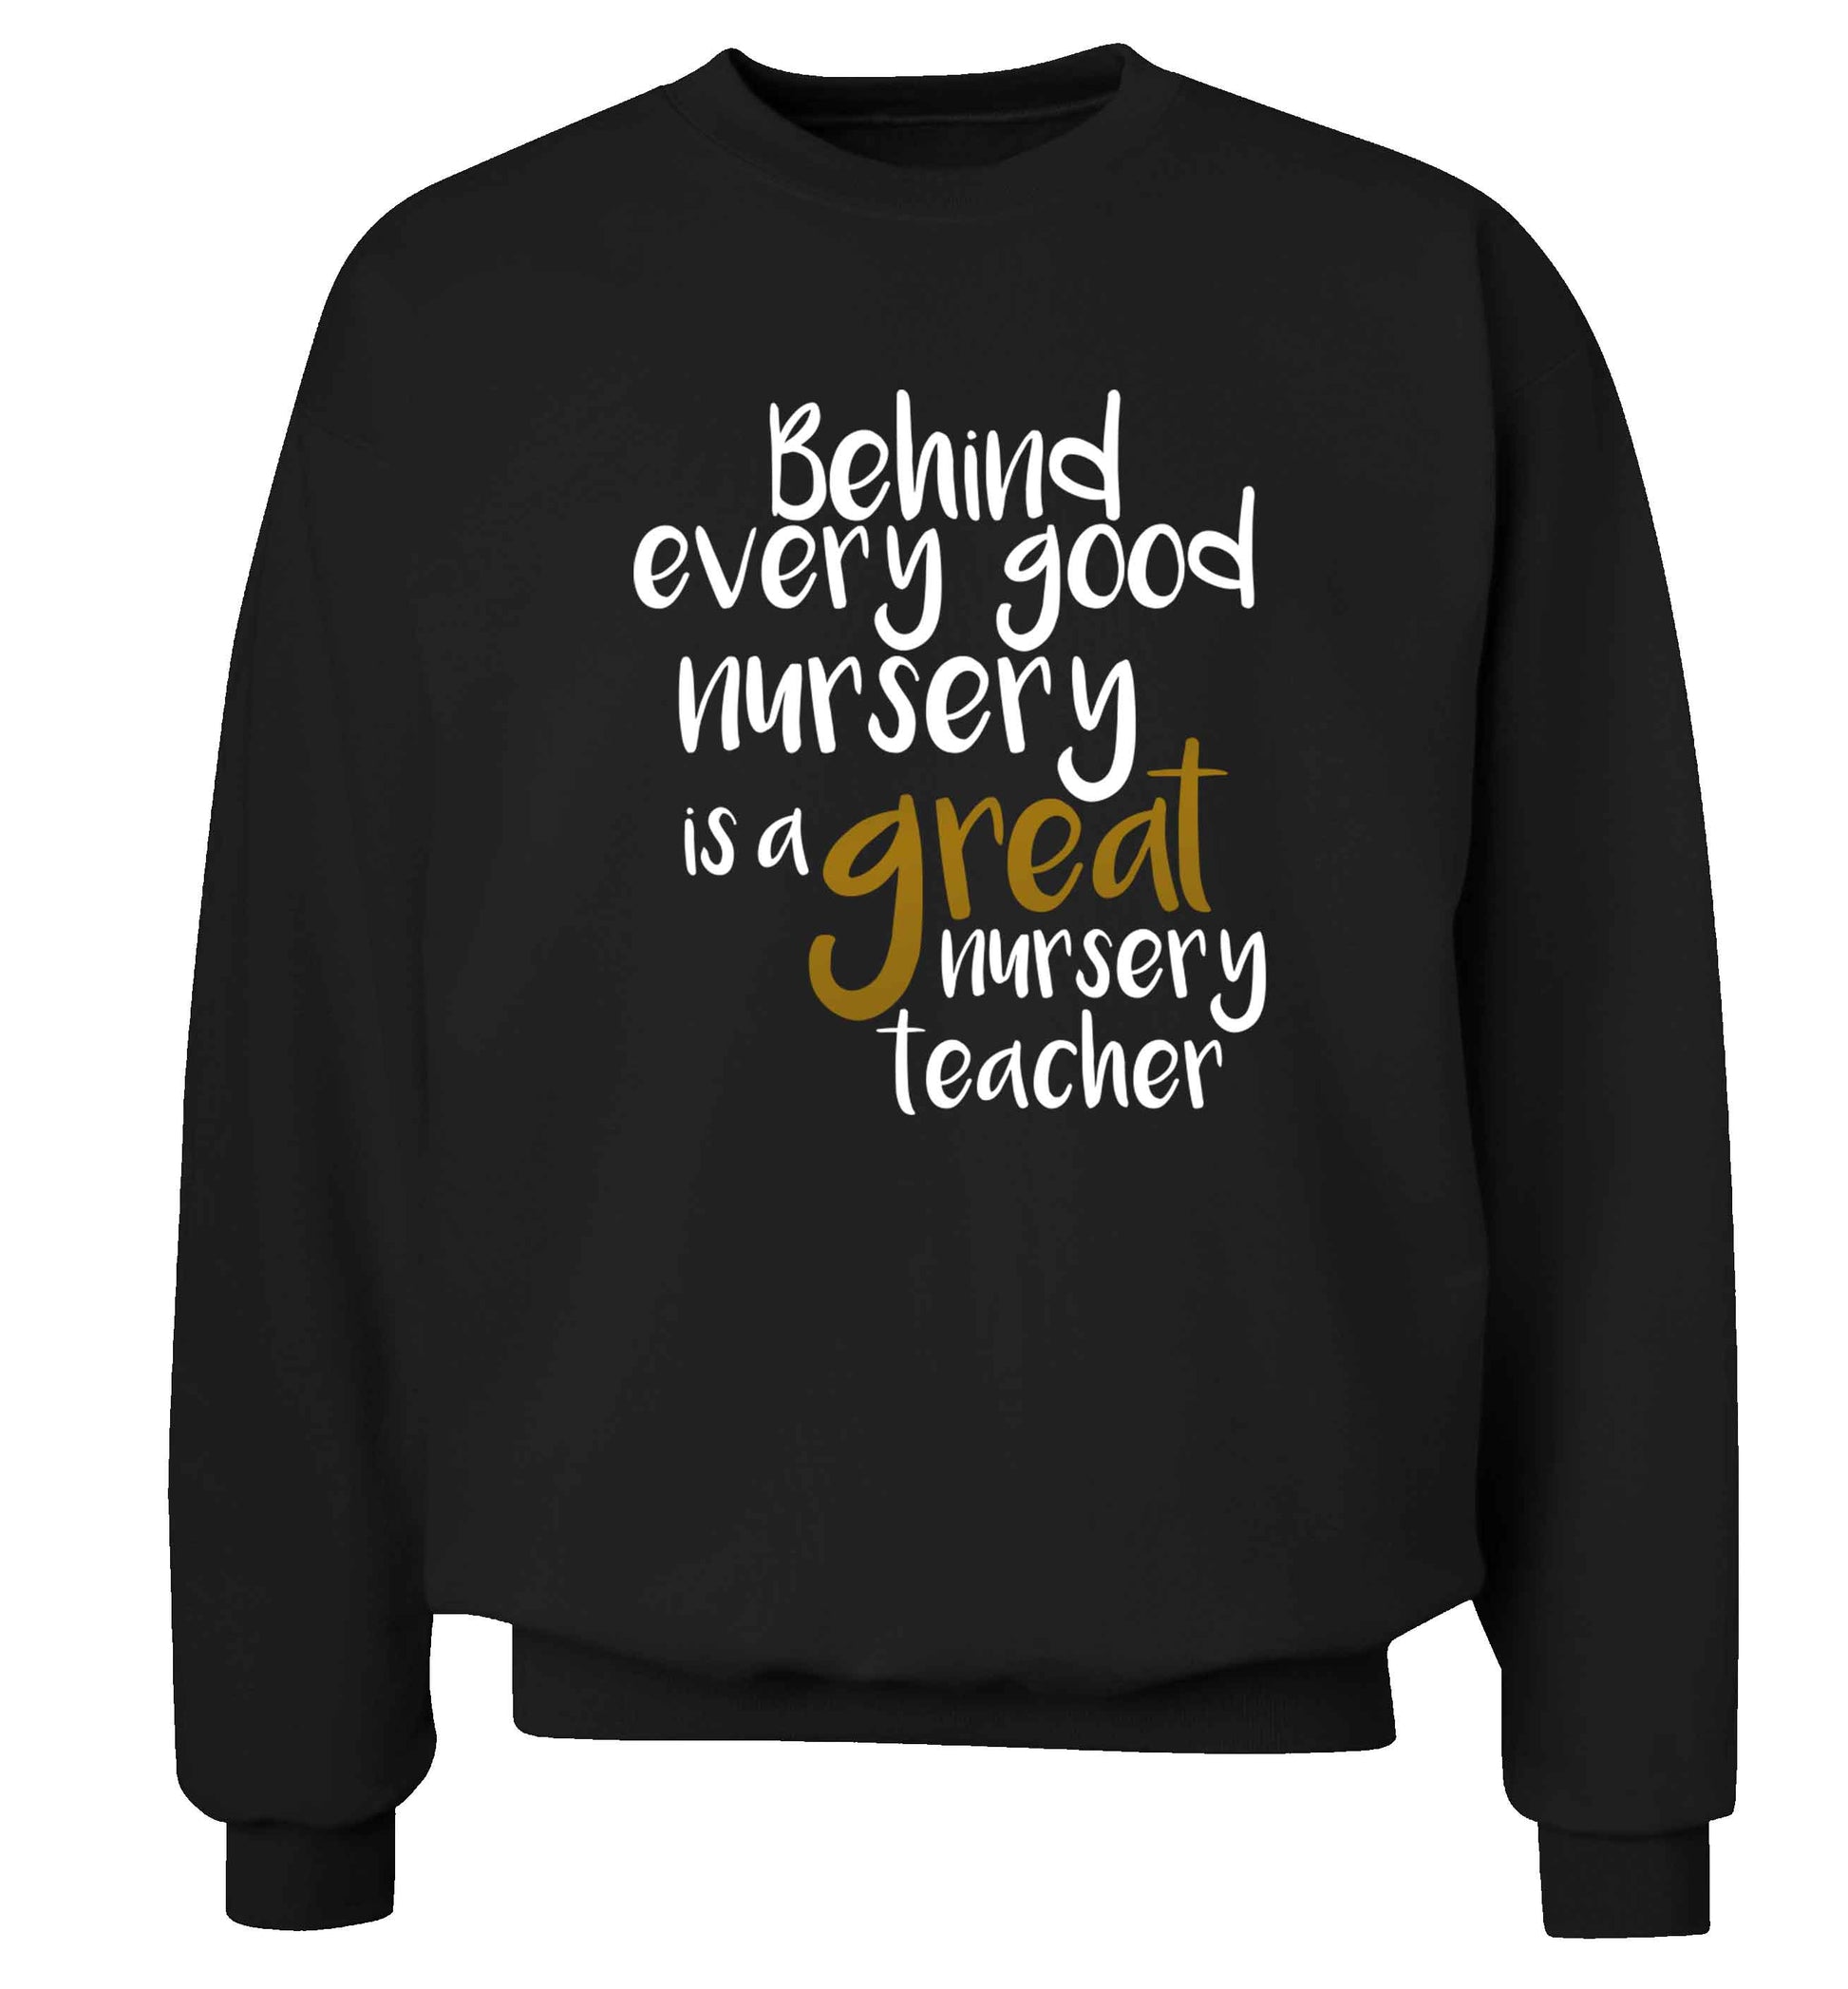 Behind every good nursery is a great nursery teacher Adult's unisex black Sweater 2XL